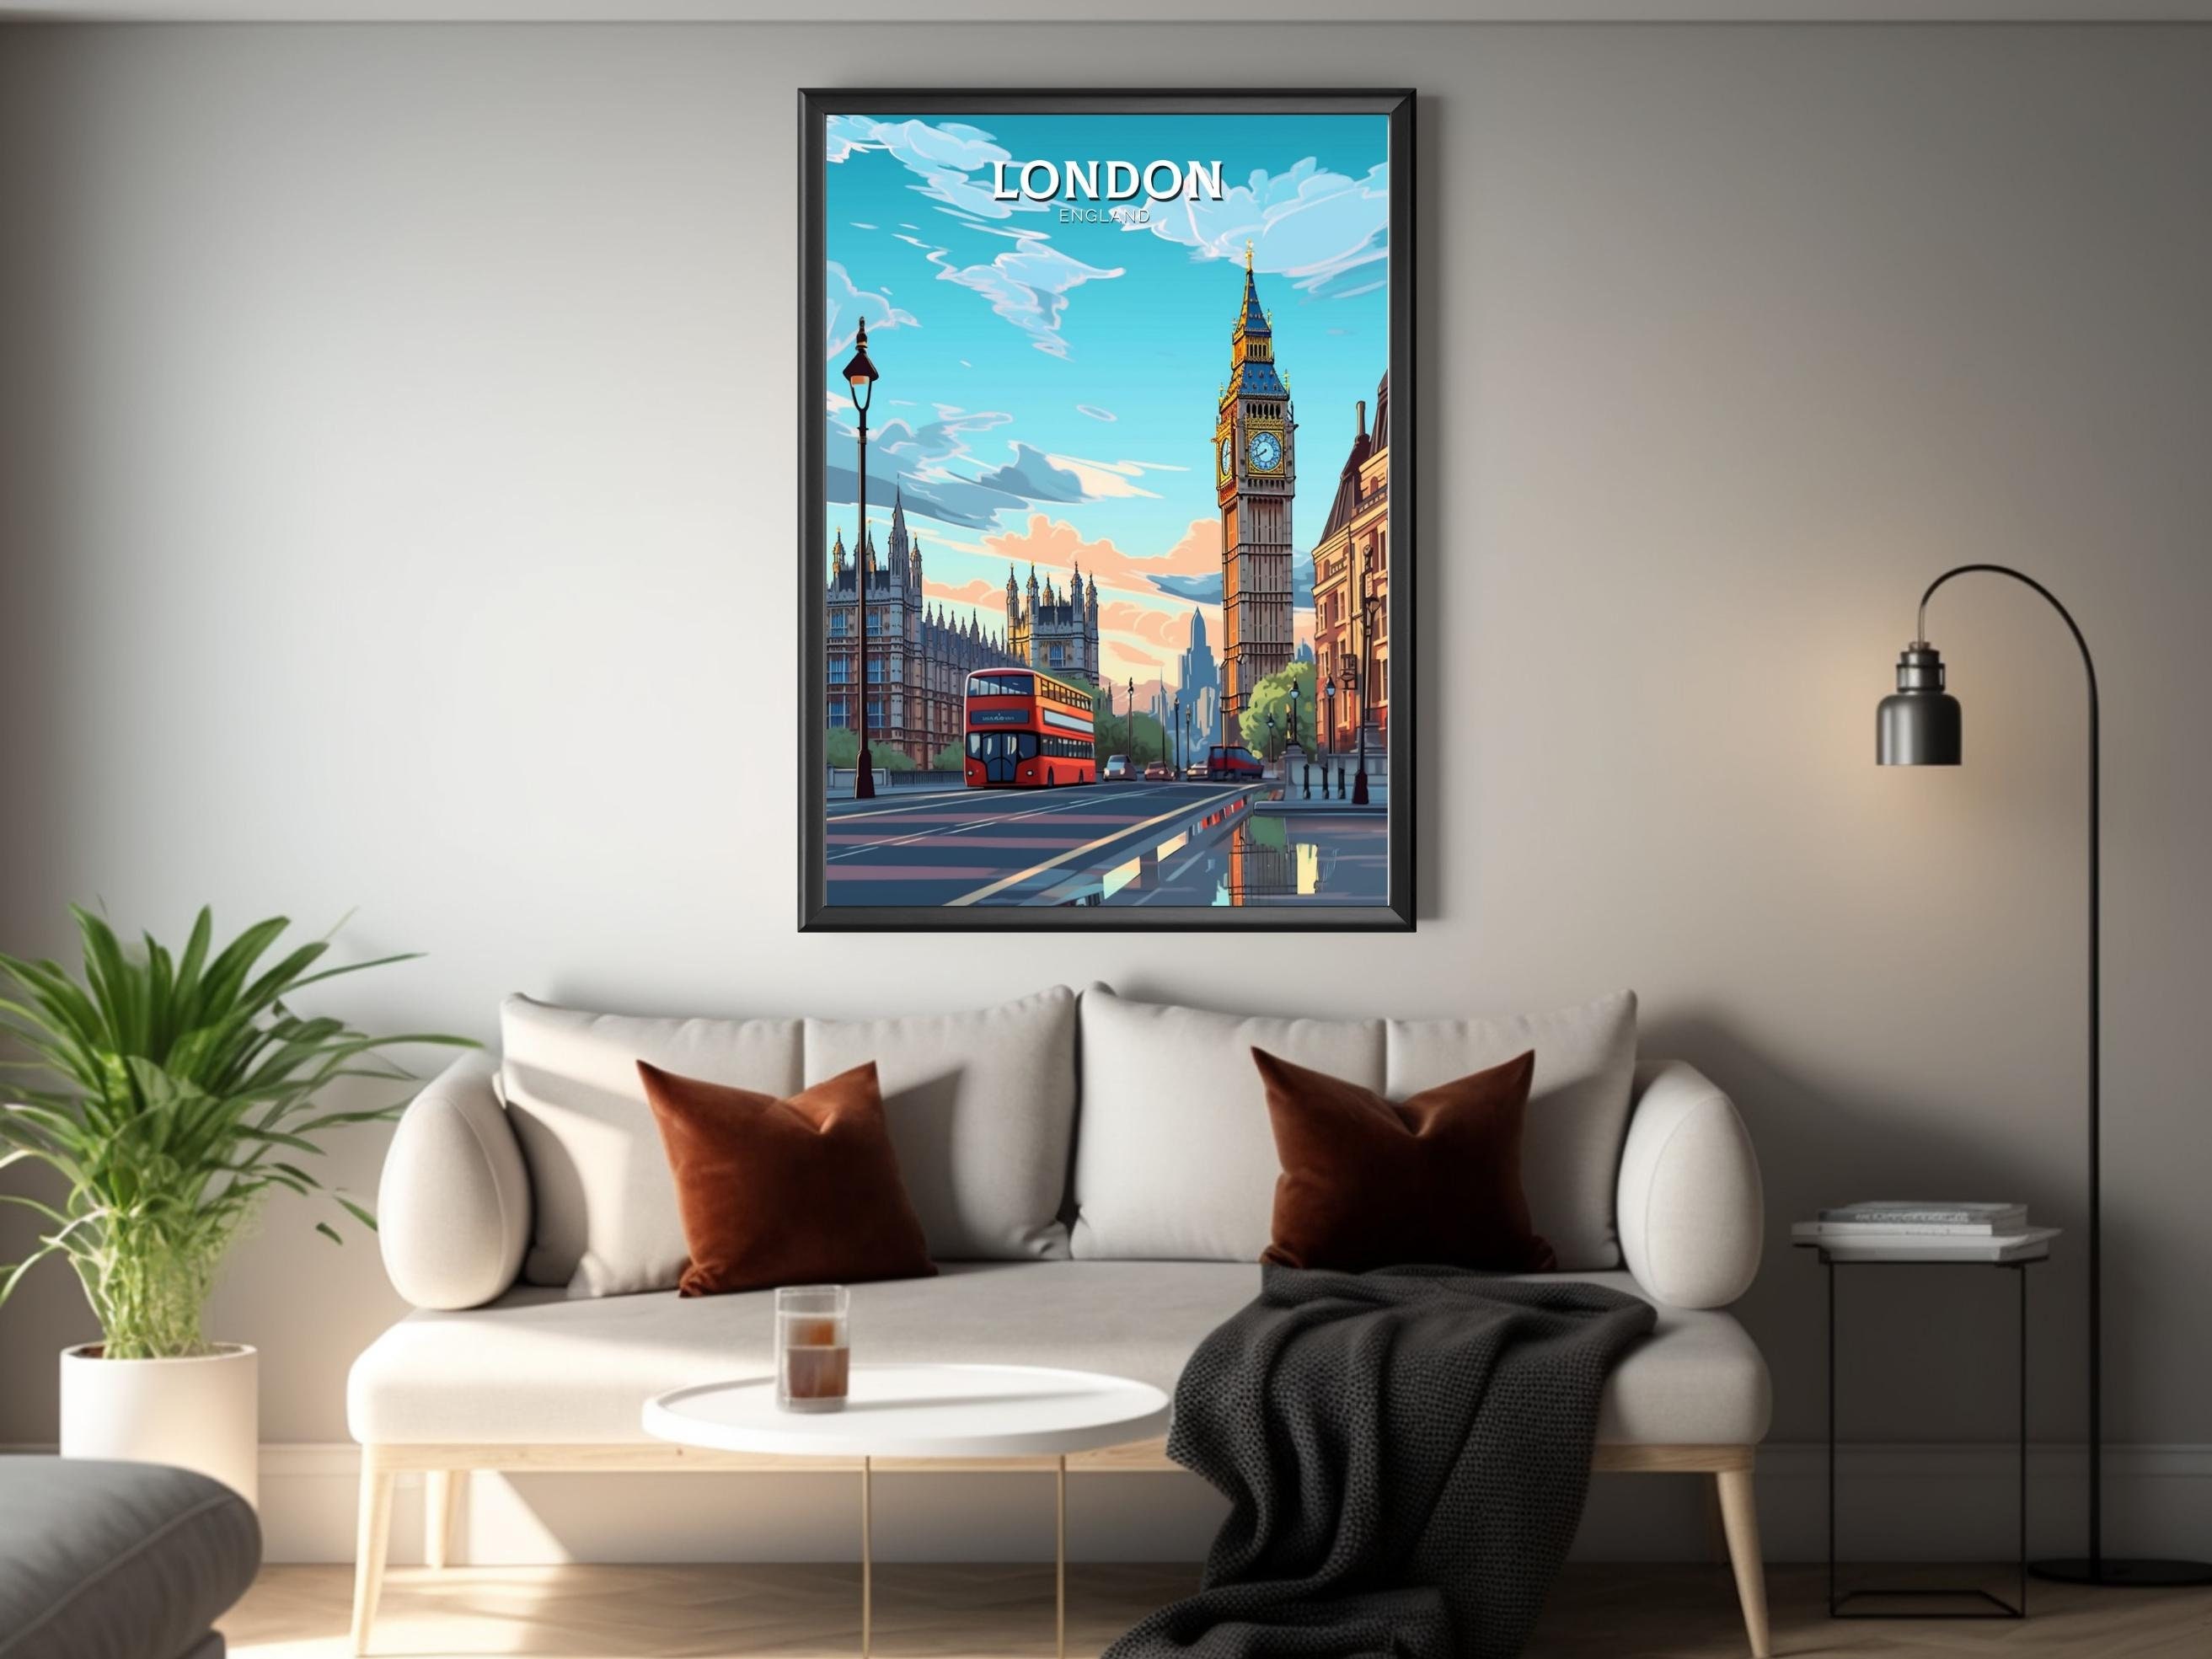 Discover London Travel Print | London Illustration | London Wall Art | London Big Ben | London Travel Poster  No Frame